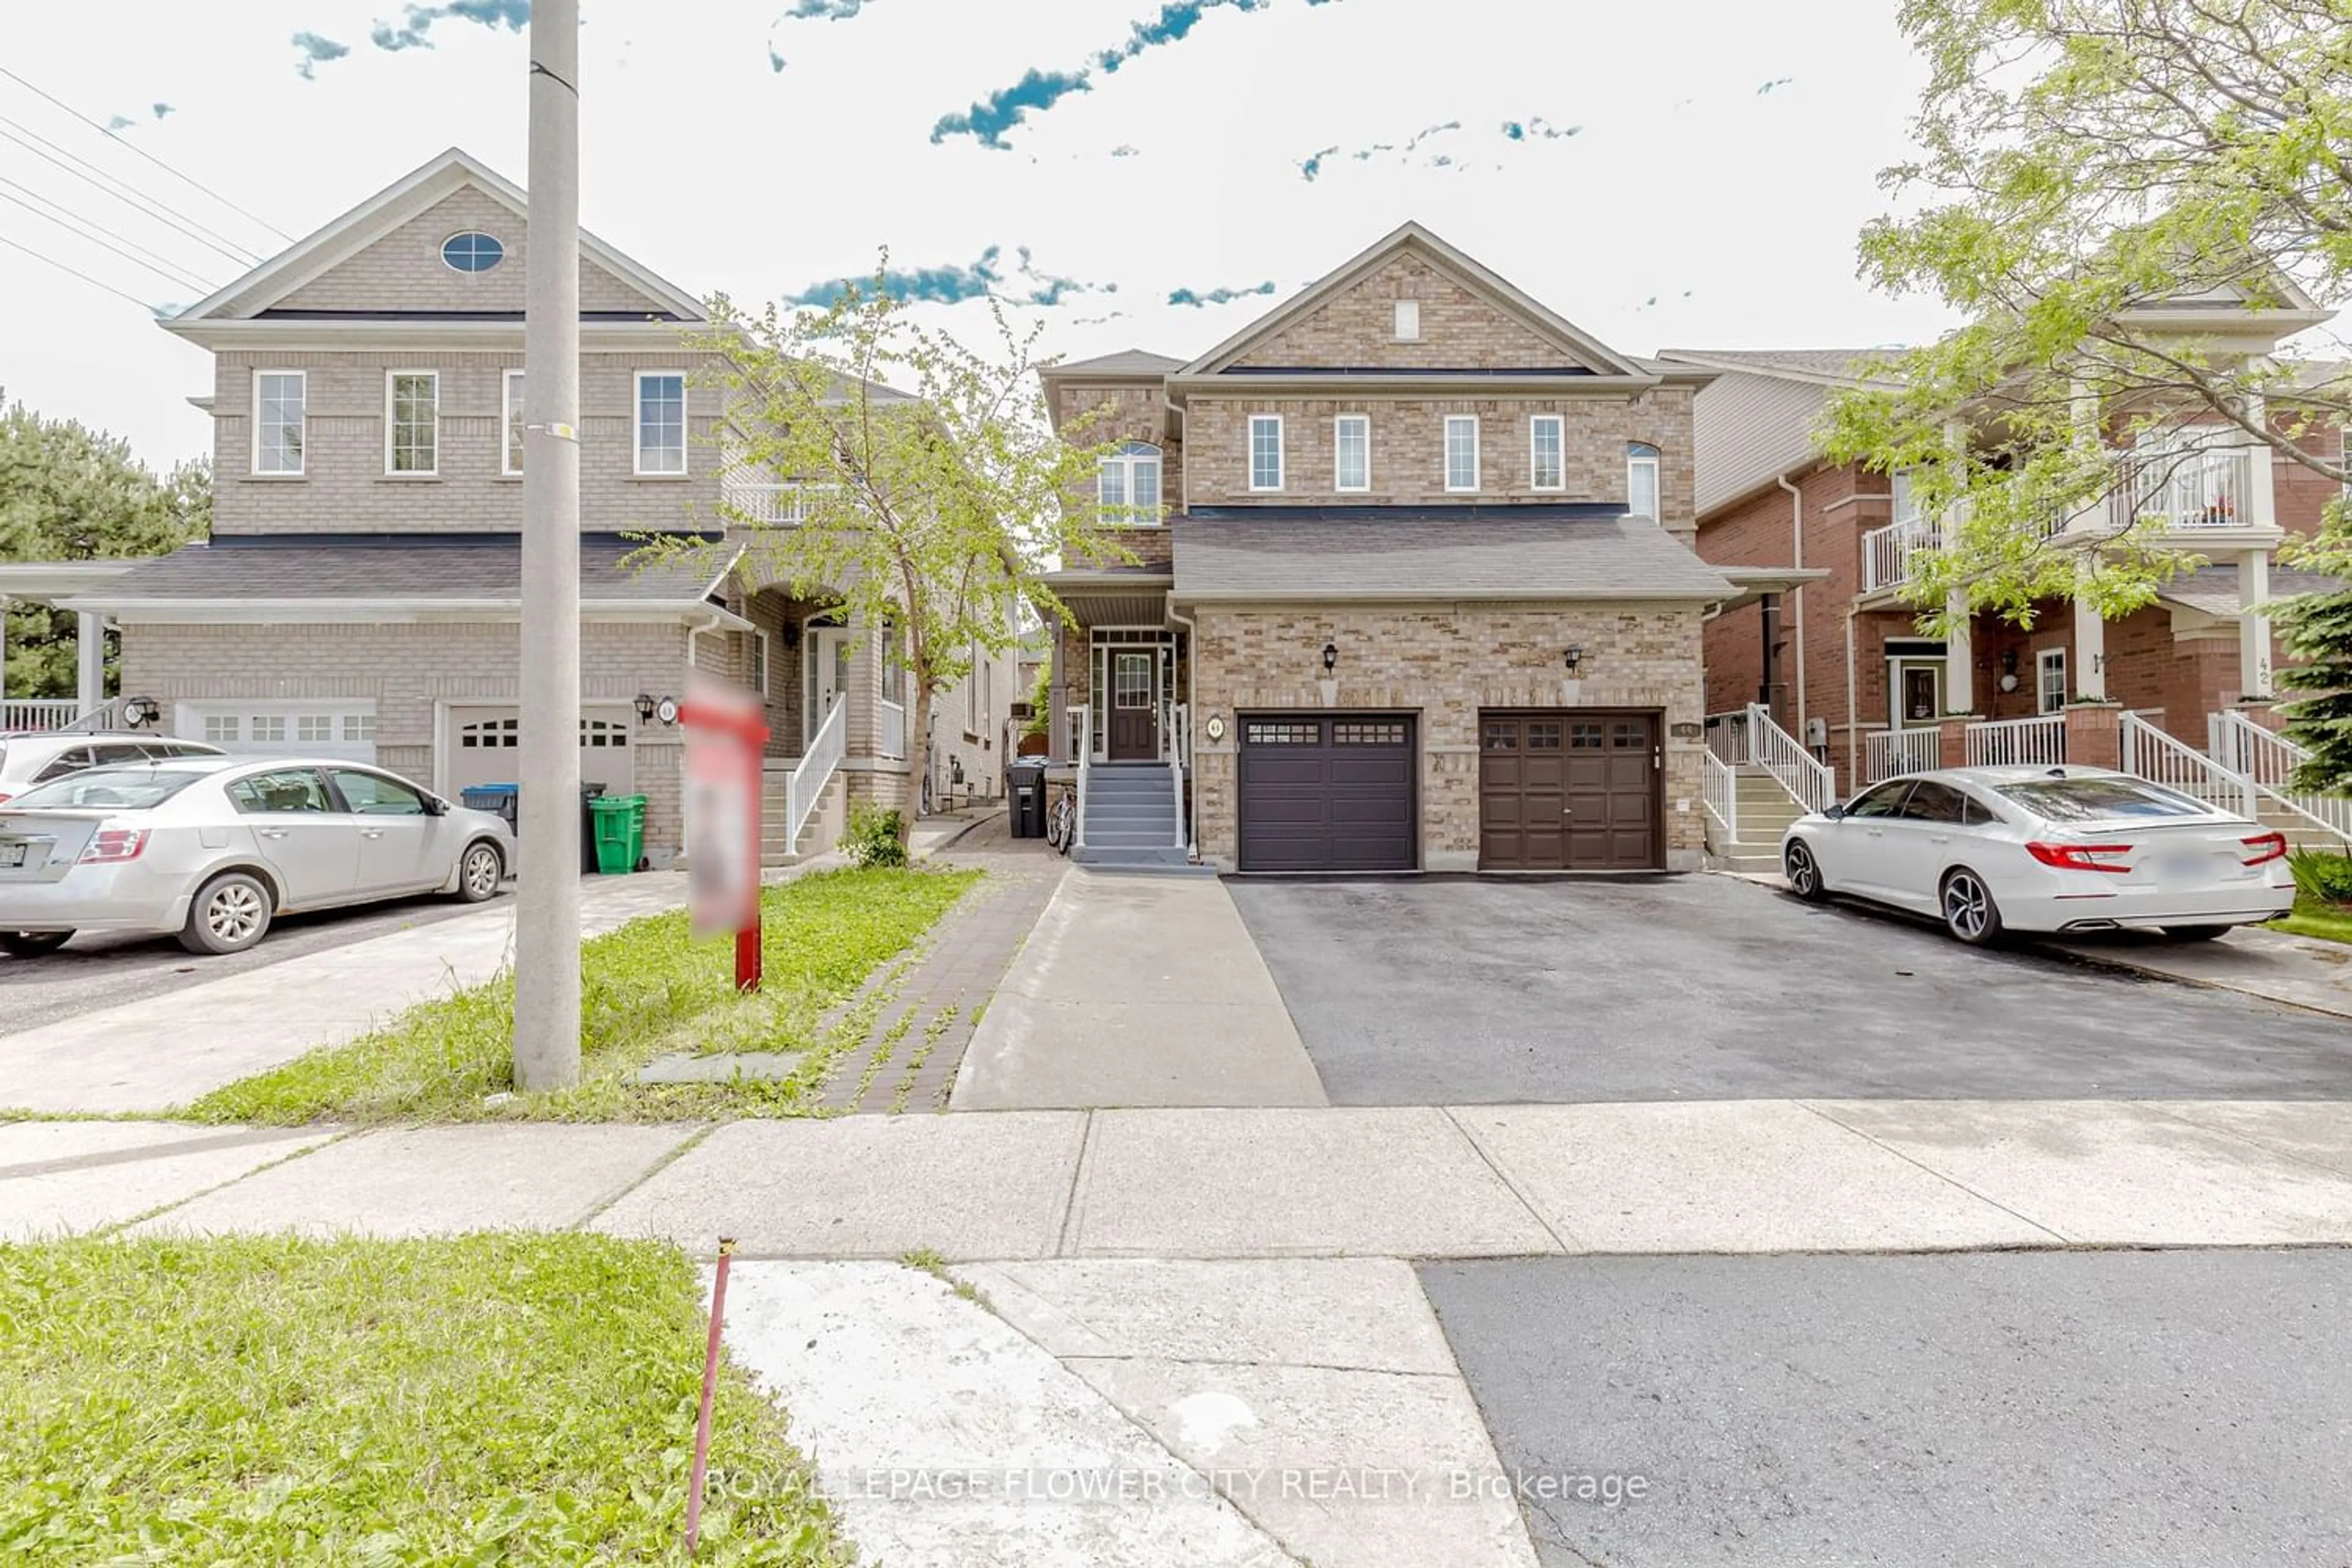 Street view for 46 Nathaniel Cres, Brampton Ontario L6Y 5M5